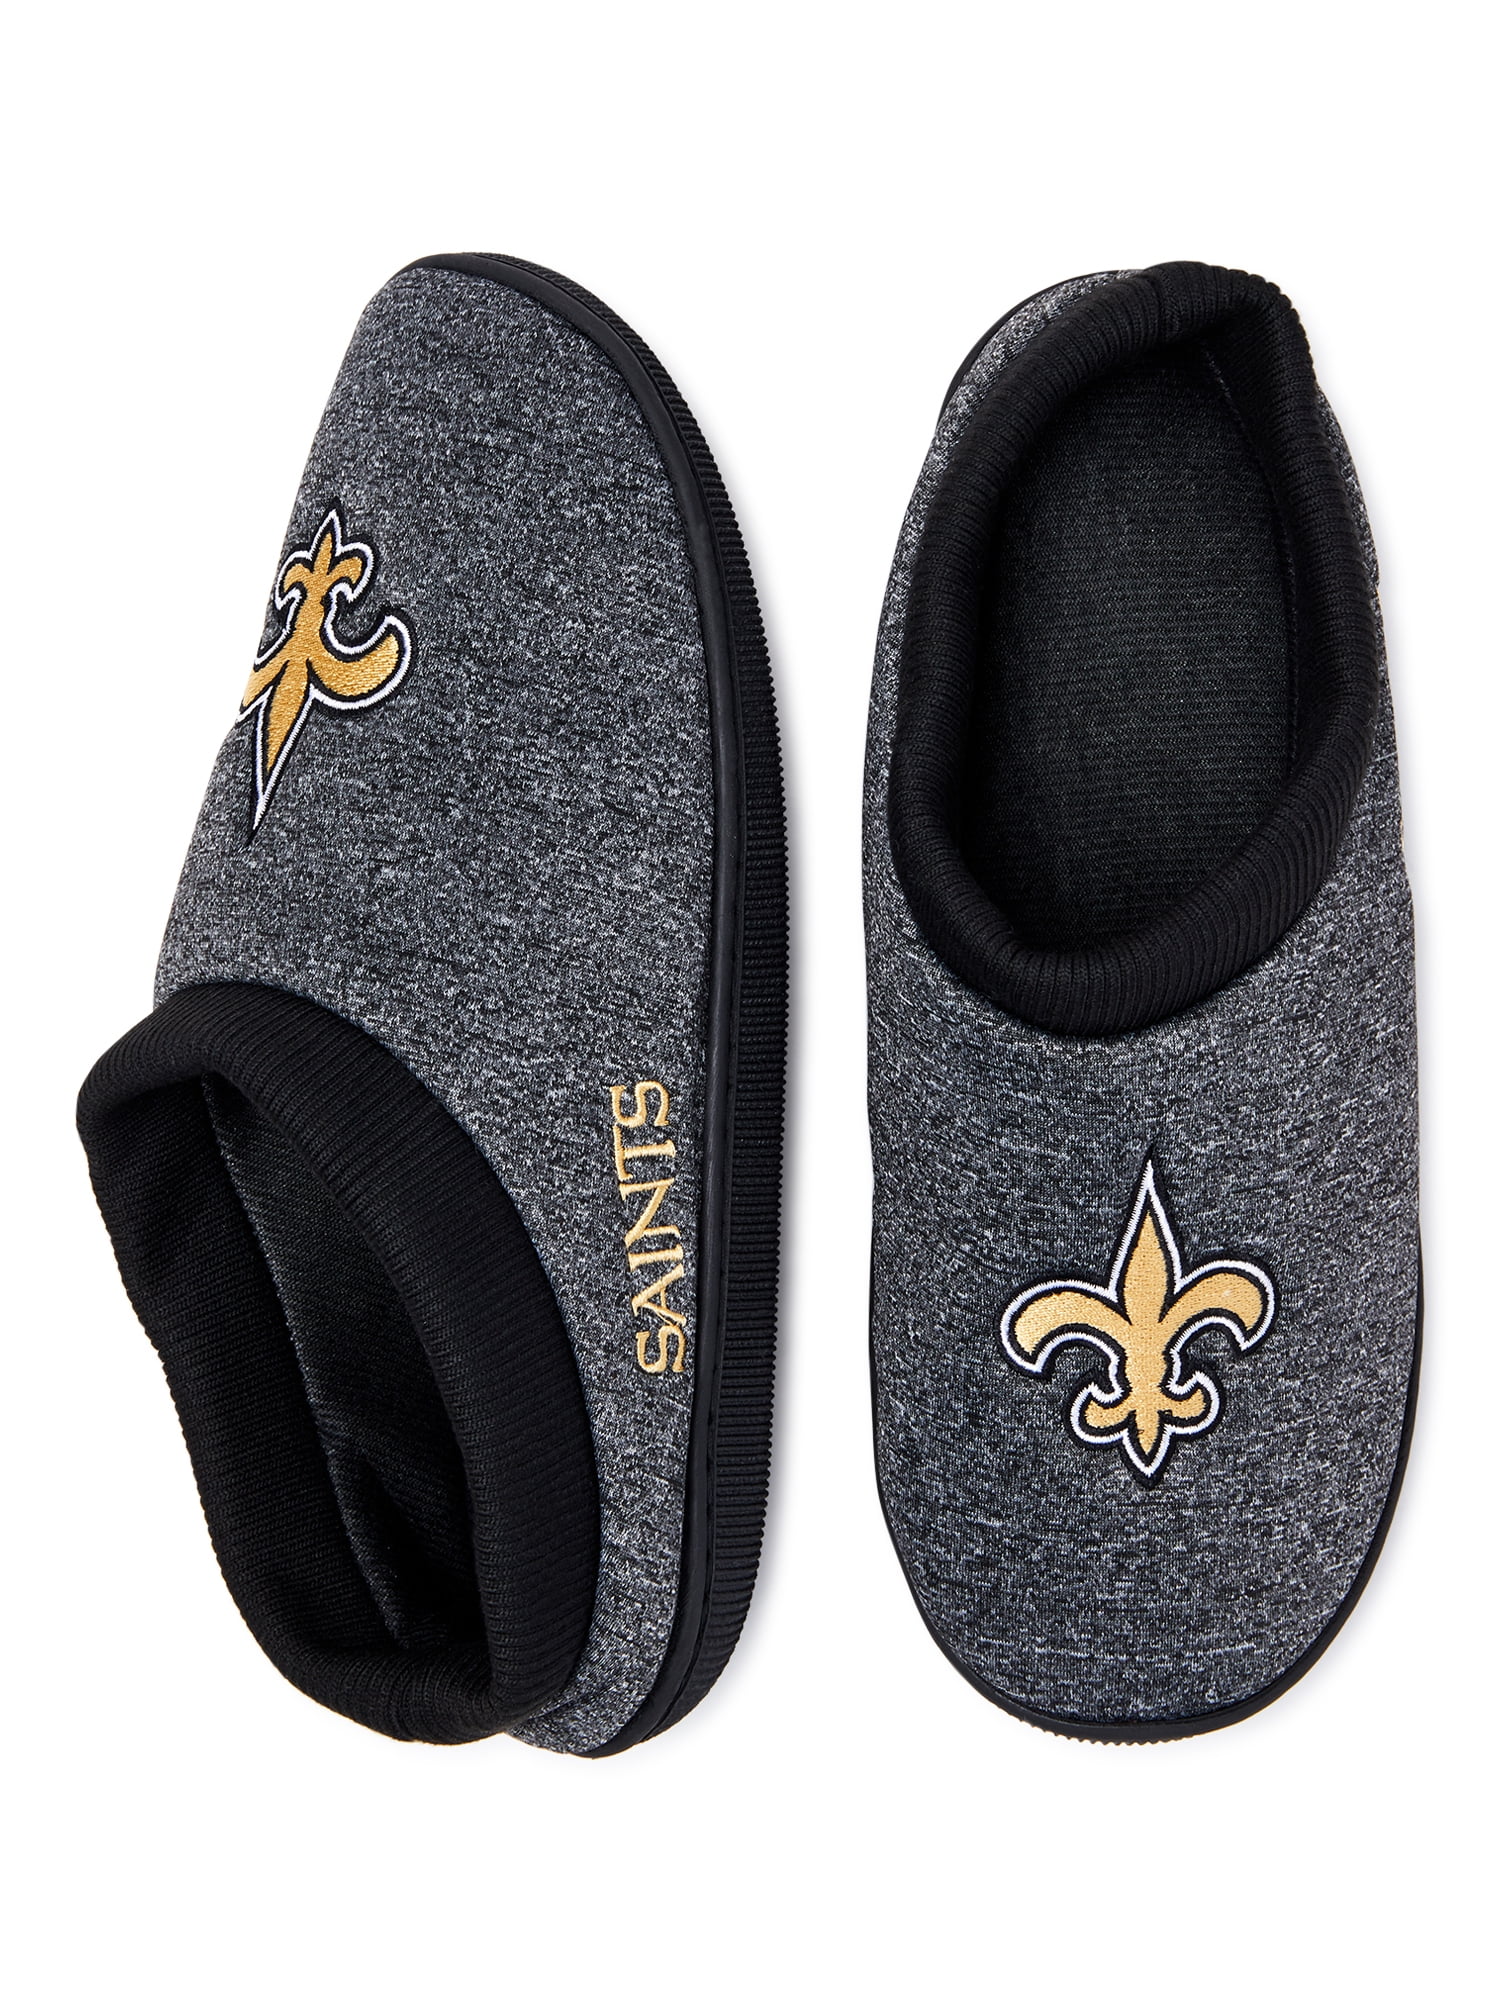 saints slippers